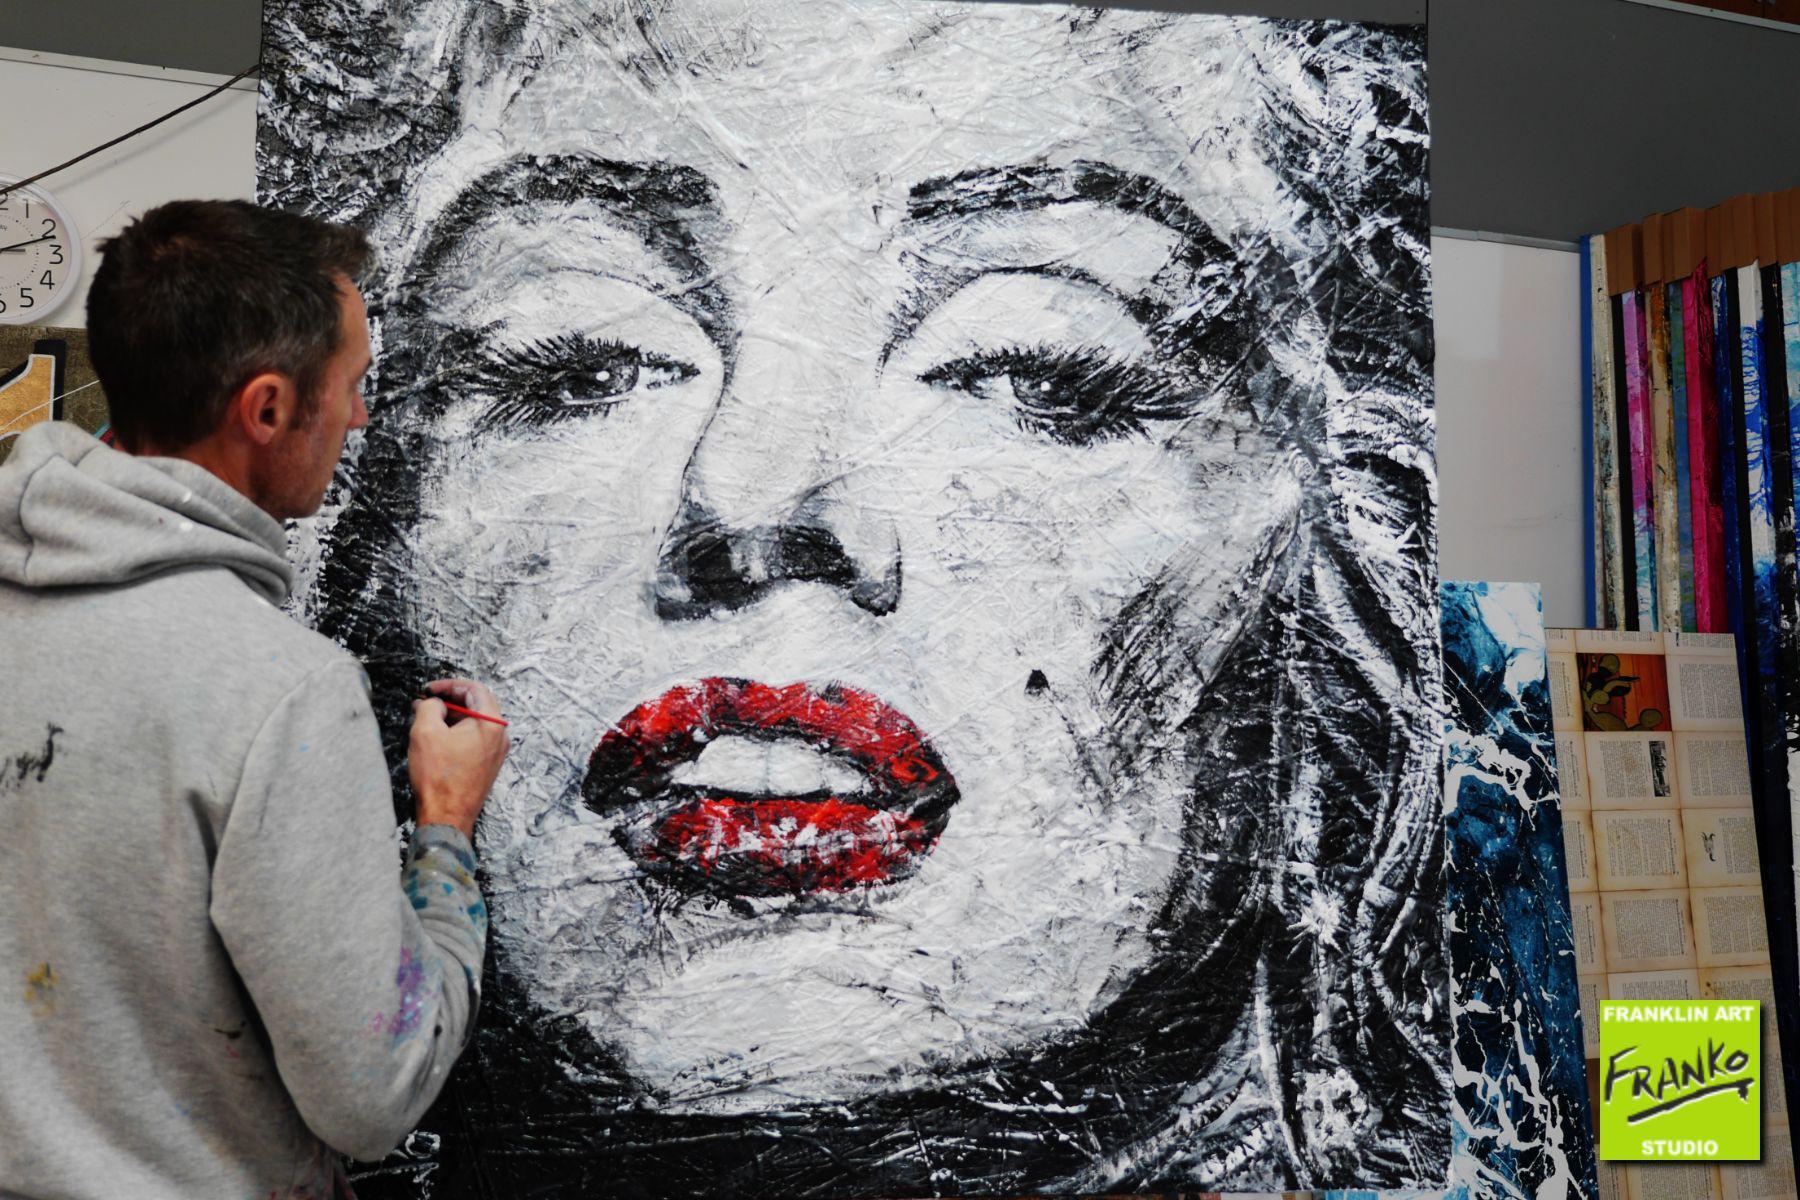 Marilyn Jazz 120cm x 120cm Marilyn Monroe Abstract Realism Painting (SOLD)-abstract realism-Franko-[franko_art]-[beautiful_Art]-[The_Block]-Franklin Art Studio